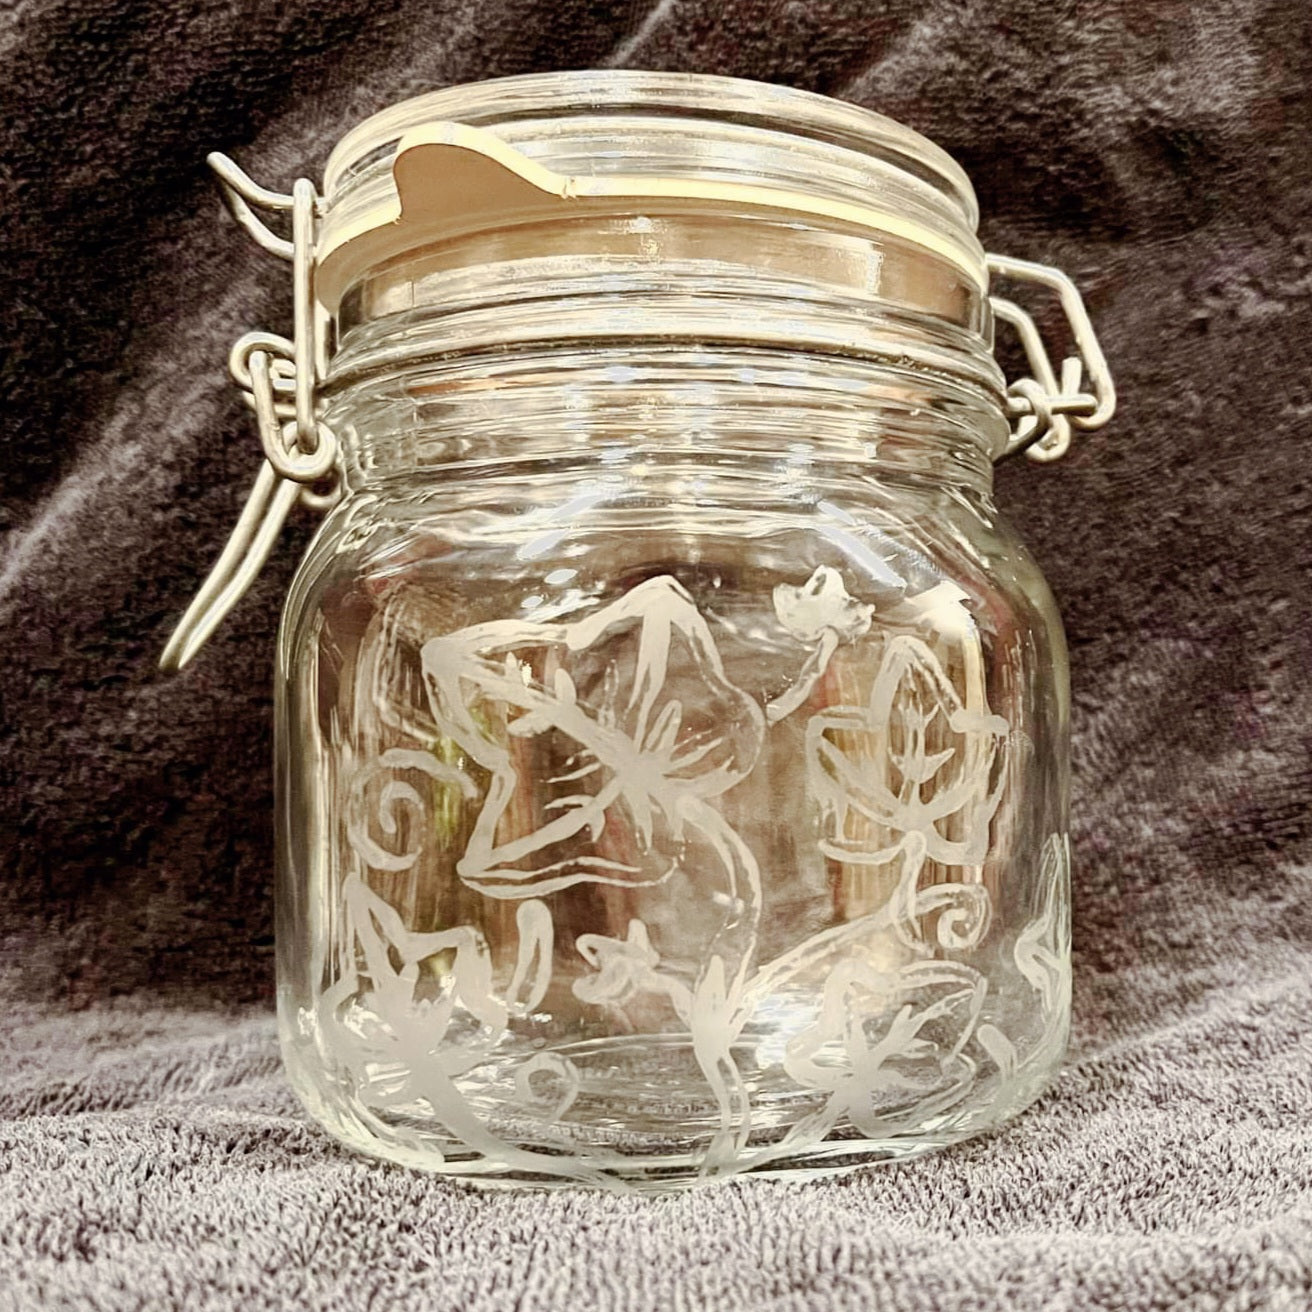 Handetched Ivy Jar